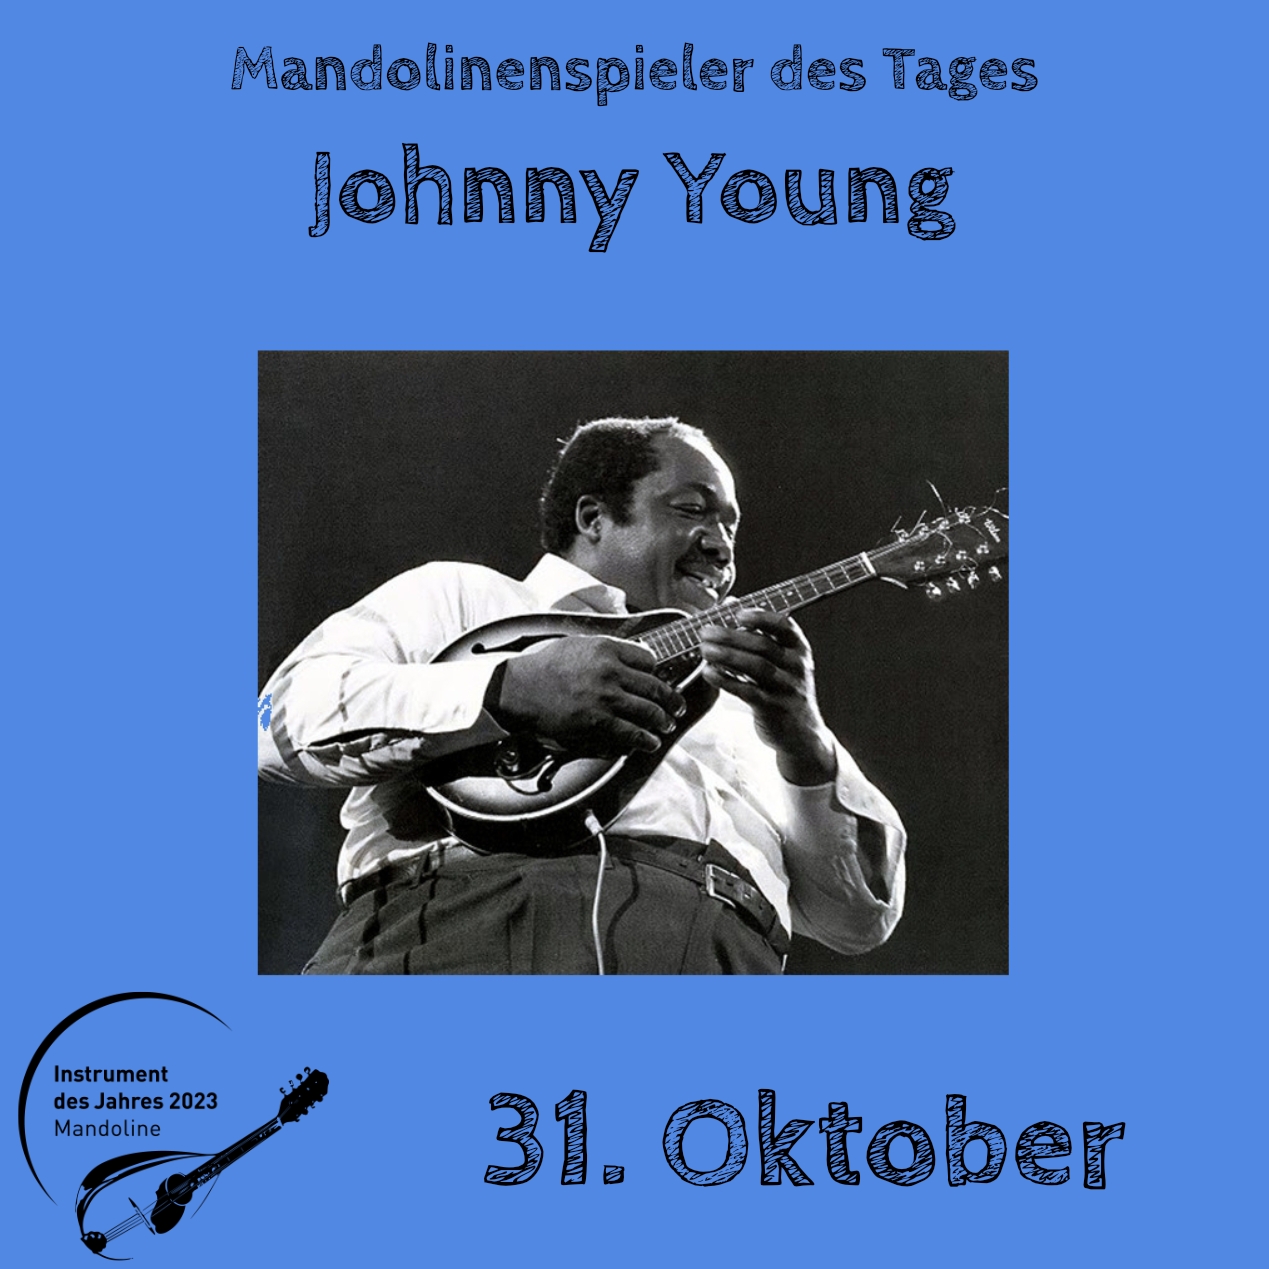 31. Oktober - Johnny Young Instrument des Jahres 2023 Mandolinenspieler Mandolinenspielerin des Tages